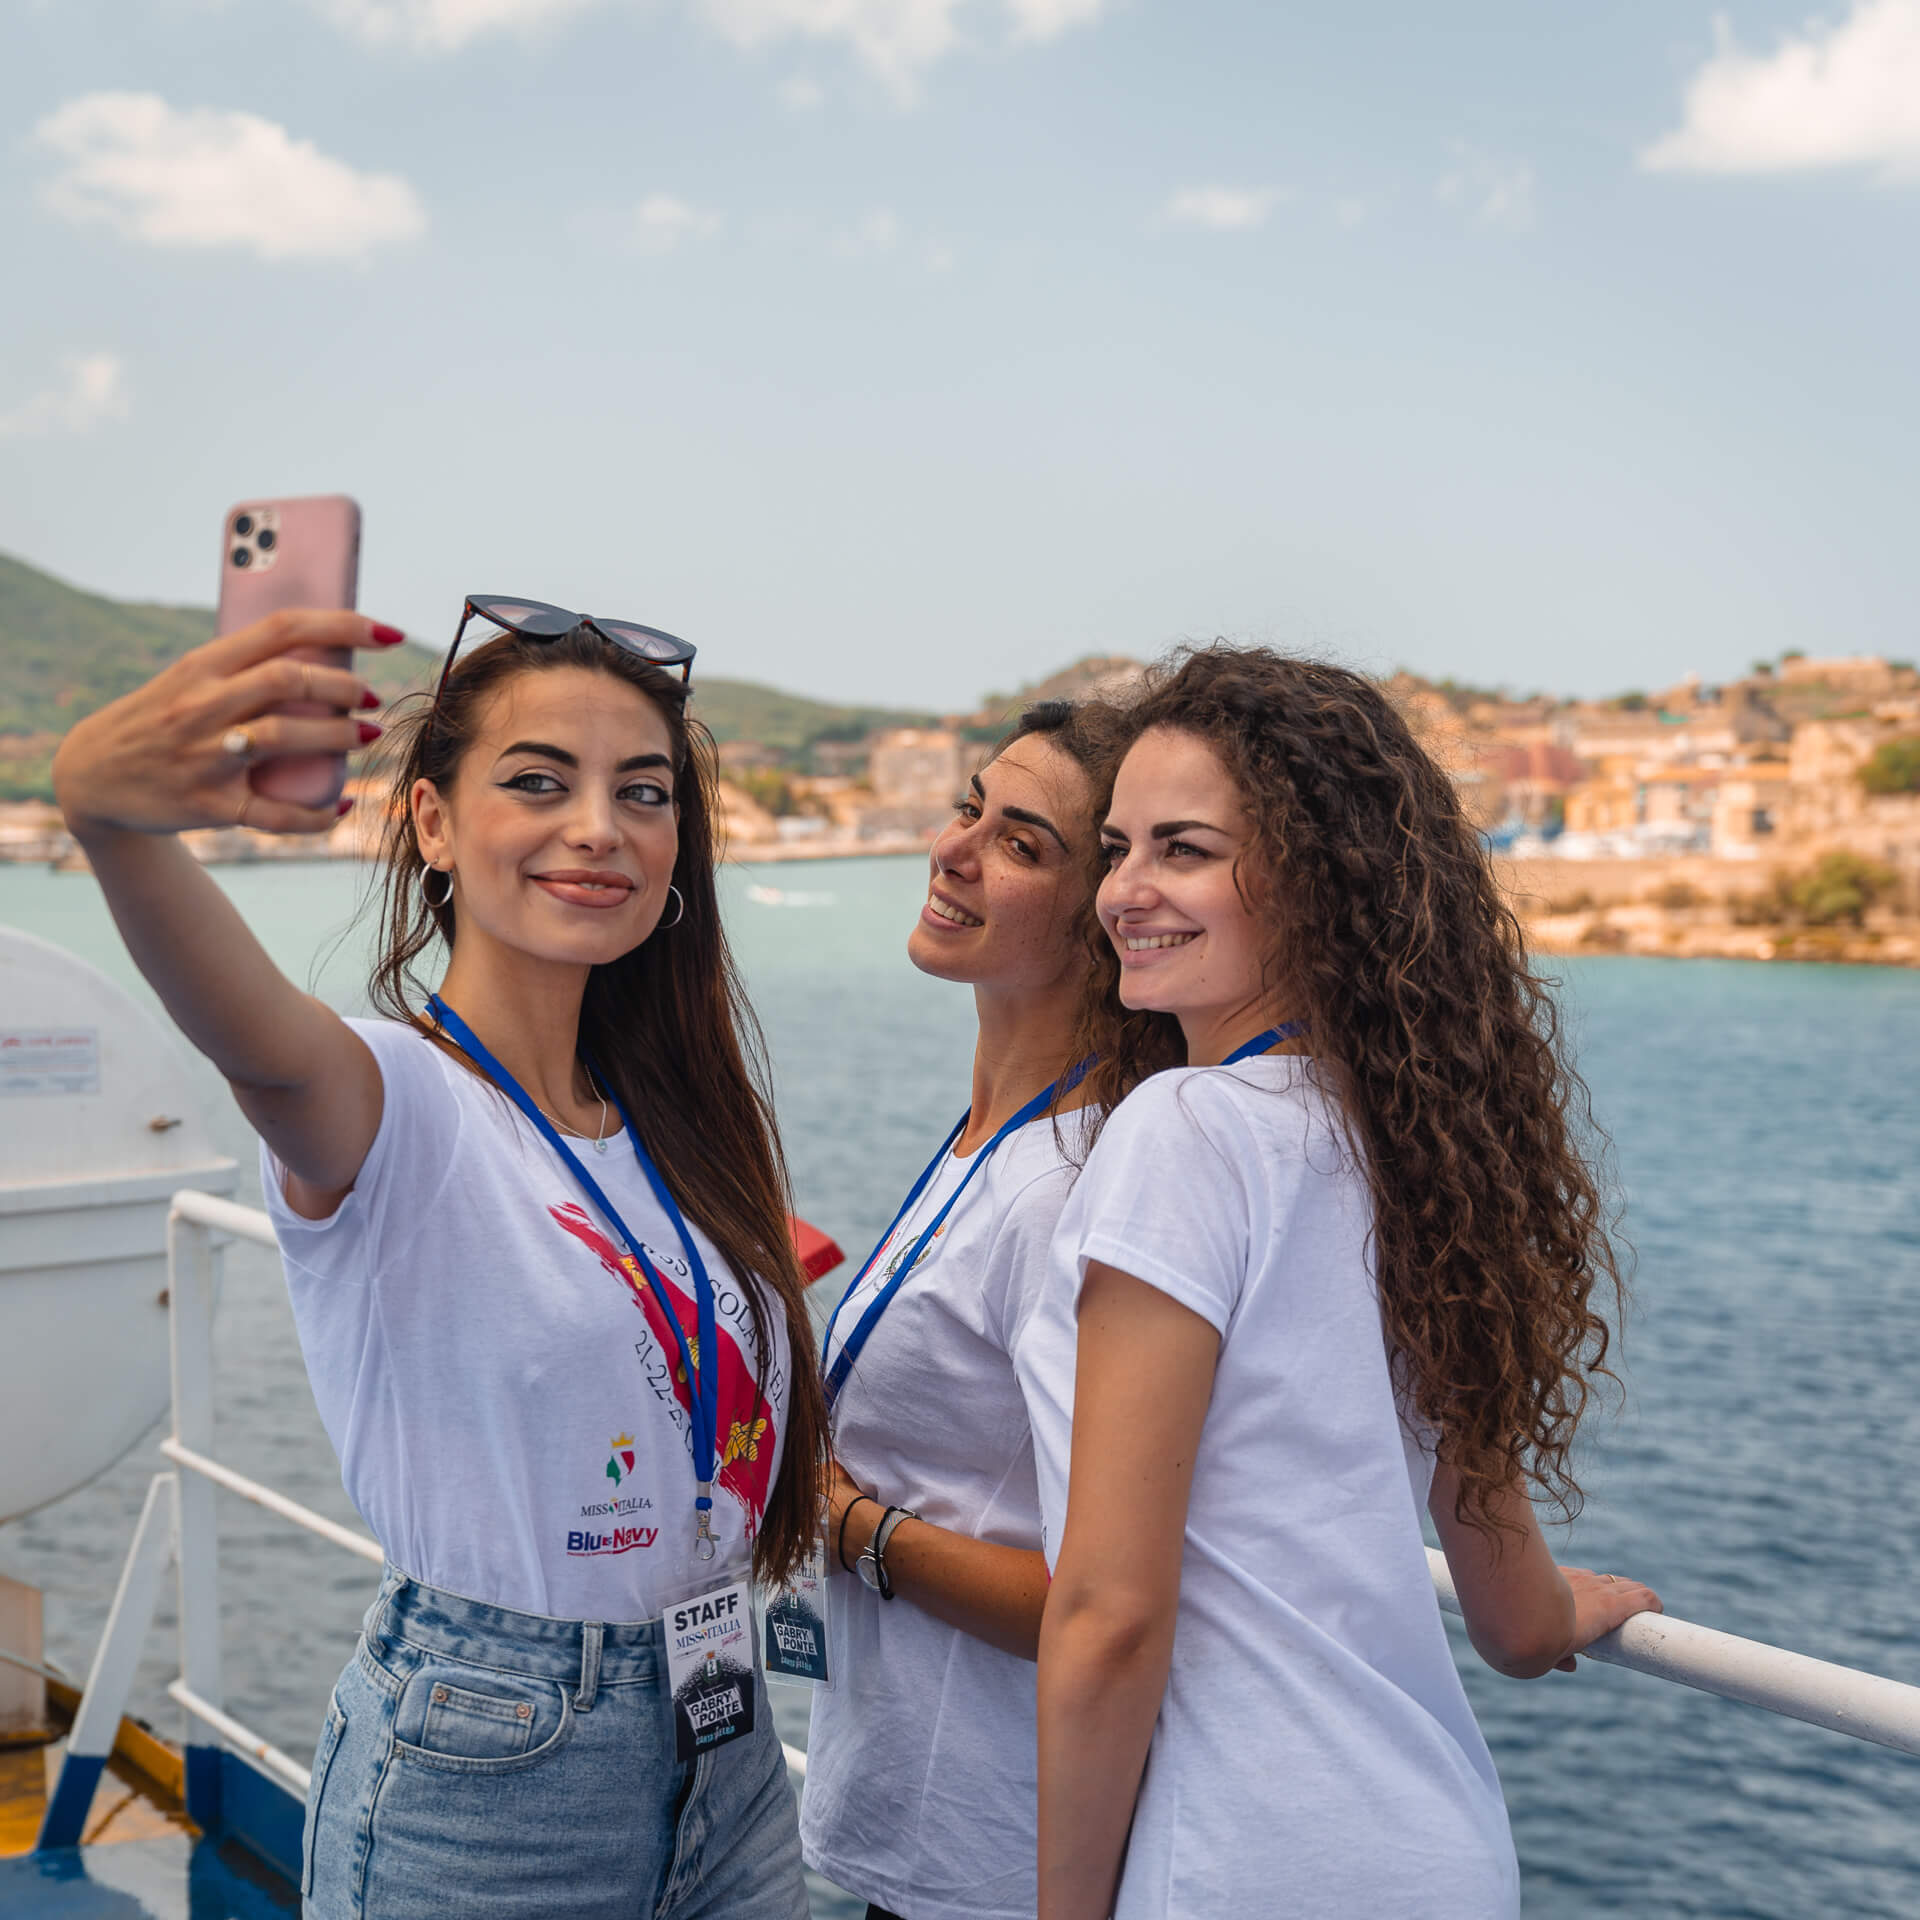 Modelle Miss Italia 2023 Elba con Blu Navy Traghetti sfondo isola dell'Elba